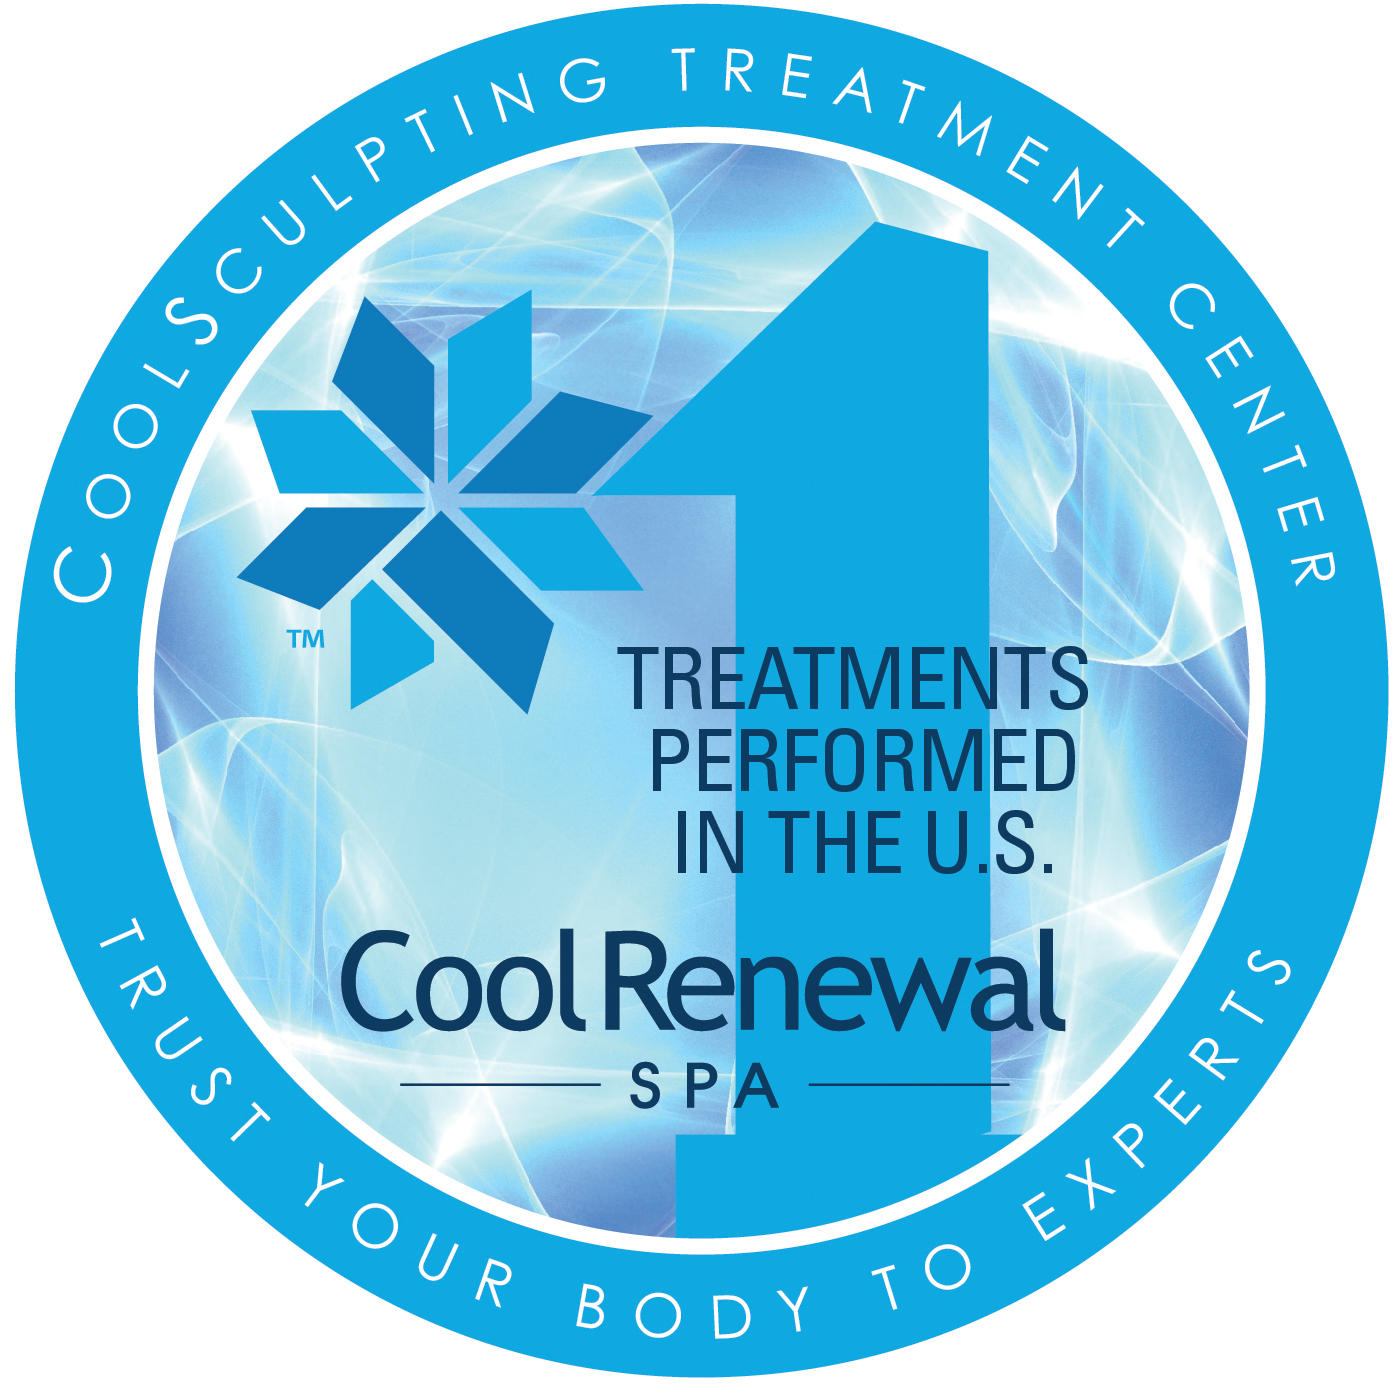 CoolRenewal Spa is #1 in CoolSculpting